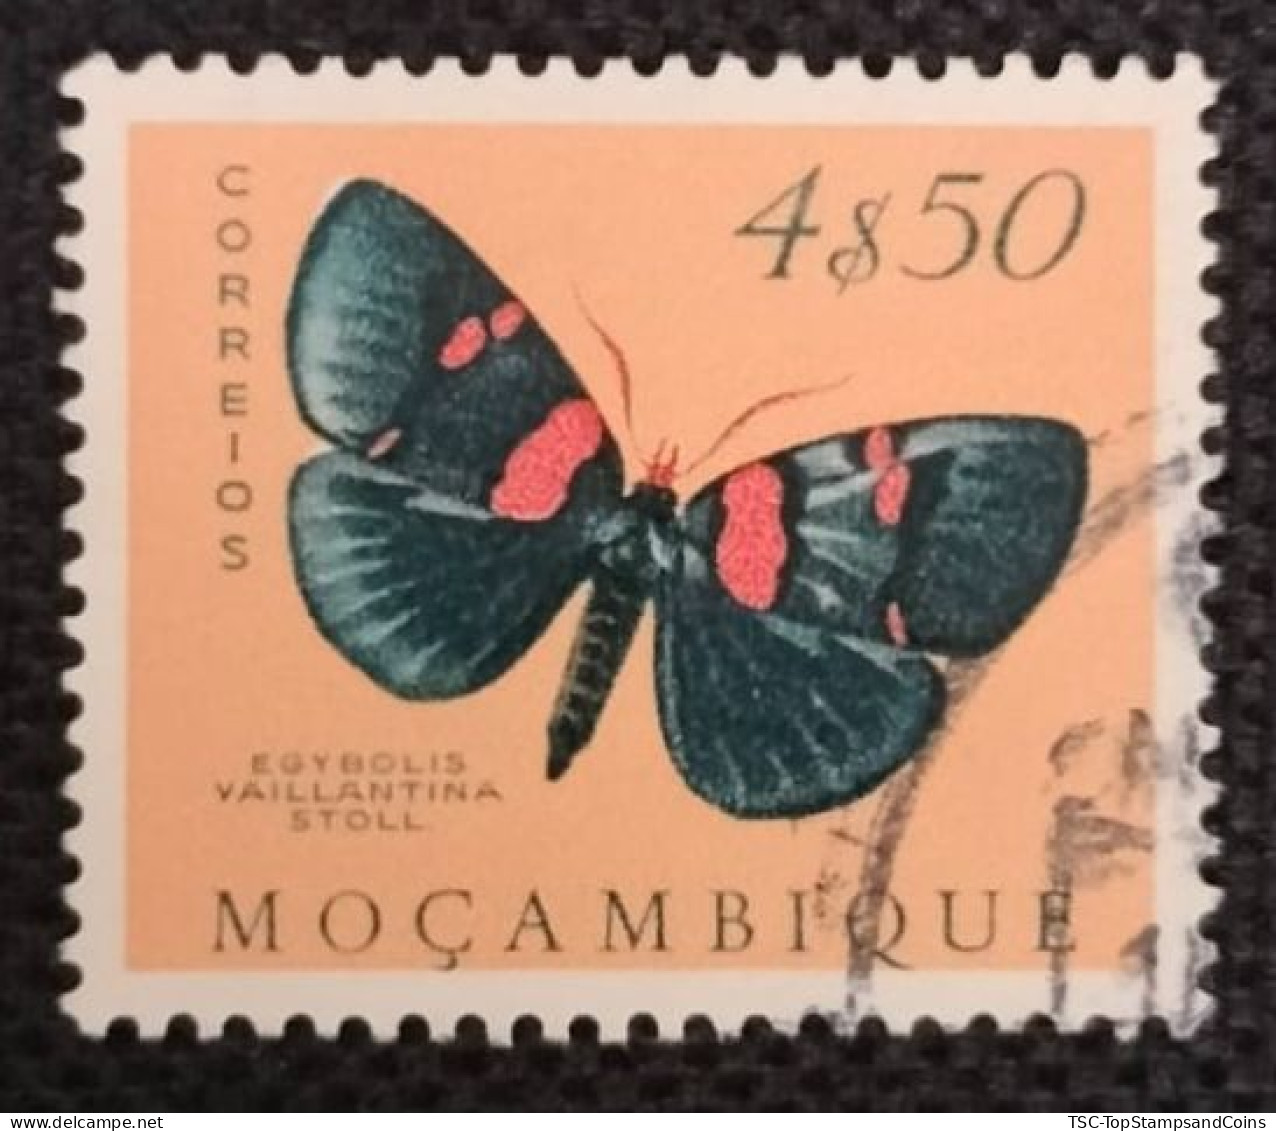 MOZPO0402UE - Mozambique Butterflies - 4$50 Used Stamp - Mozambique - 1953 - Mozambique